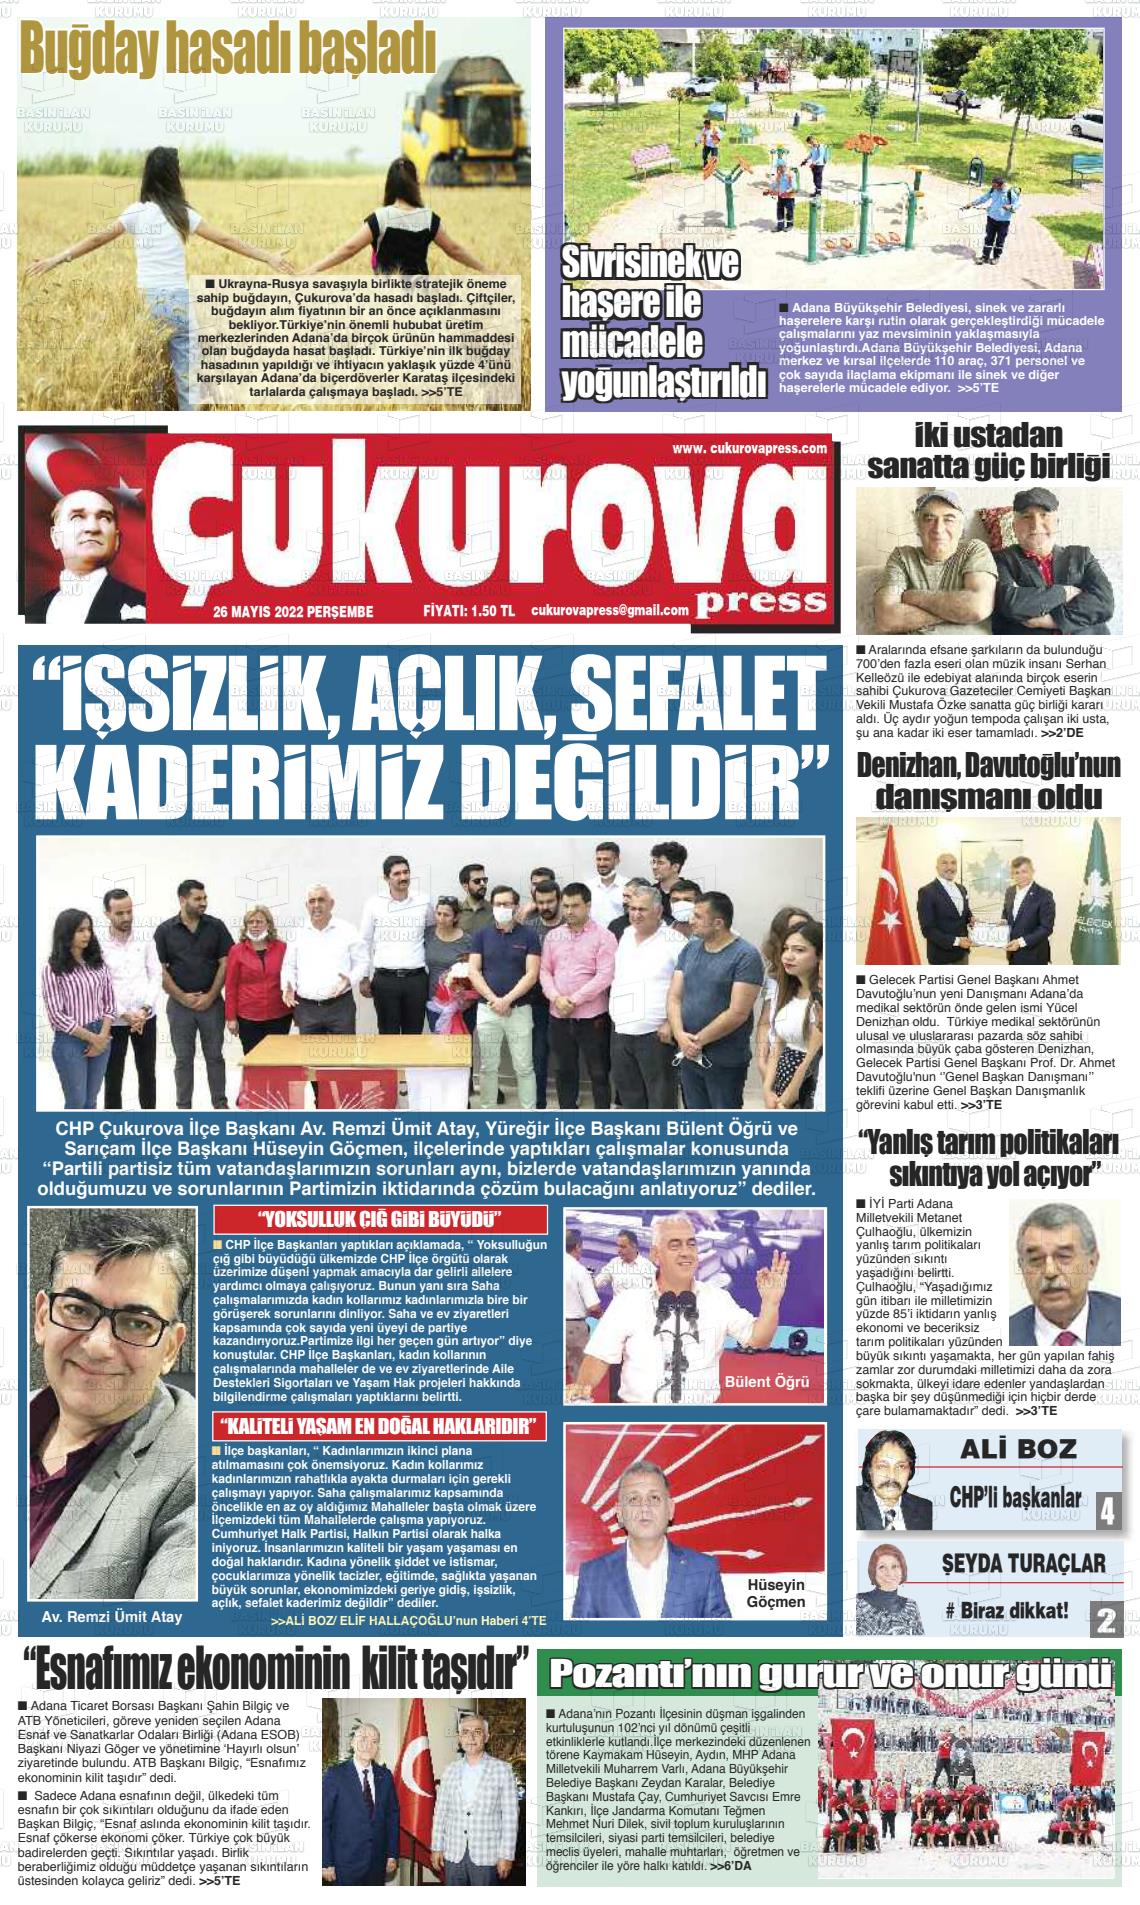 26 Mayıs 2022 Çukurova Press Gazete Manşeti